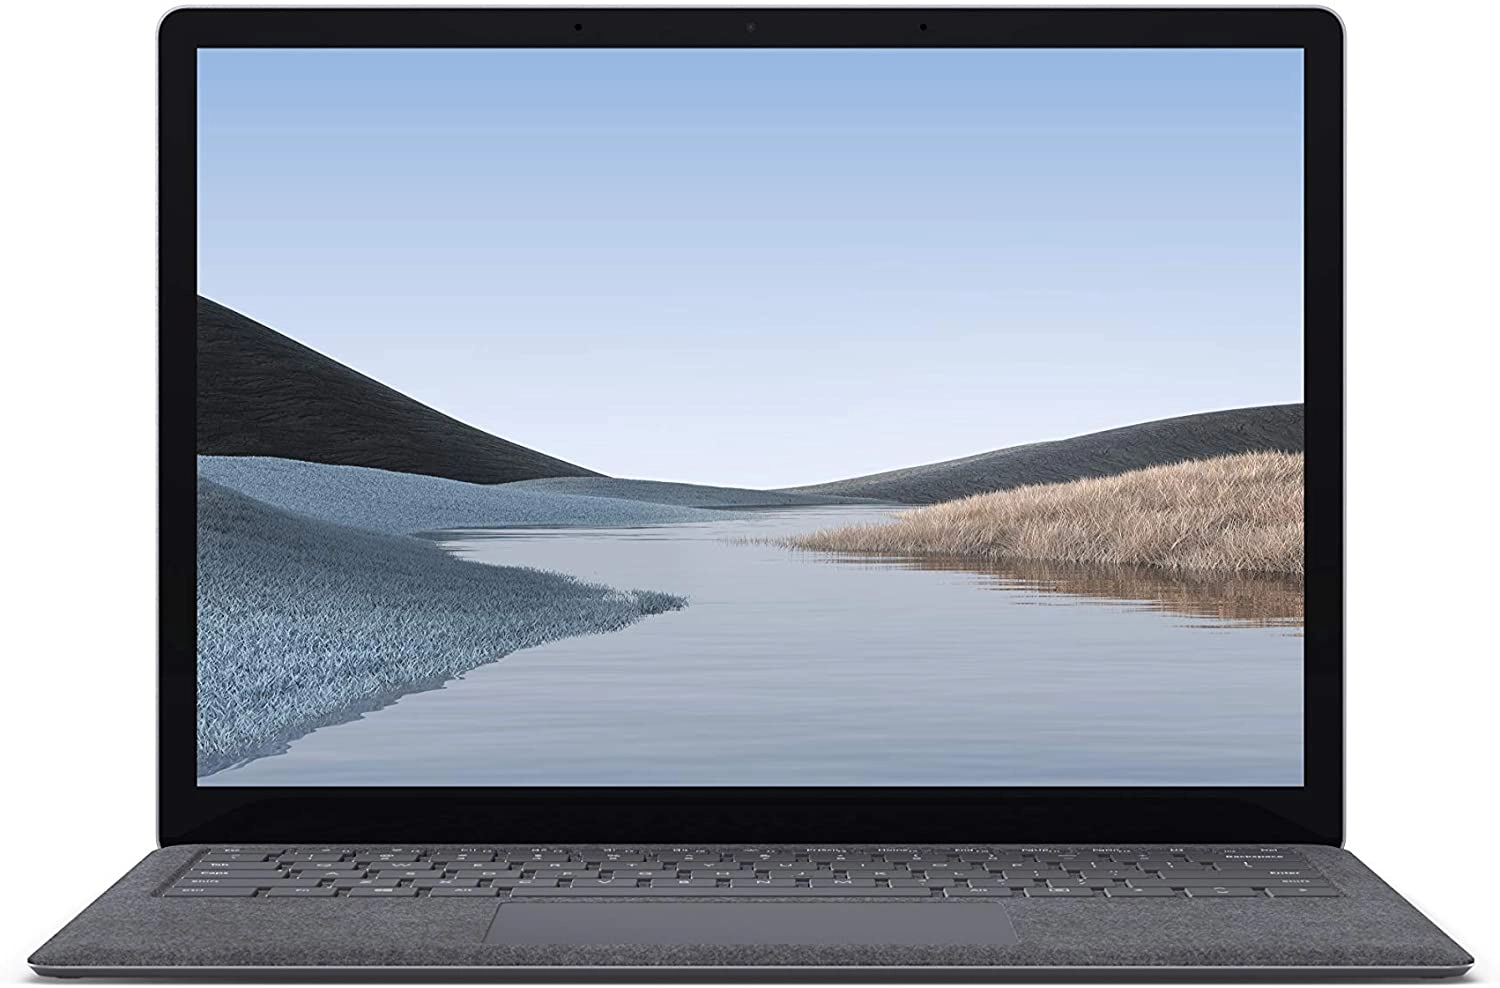 imagen portátil Microsoft Surface Laptop